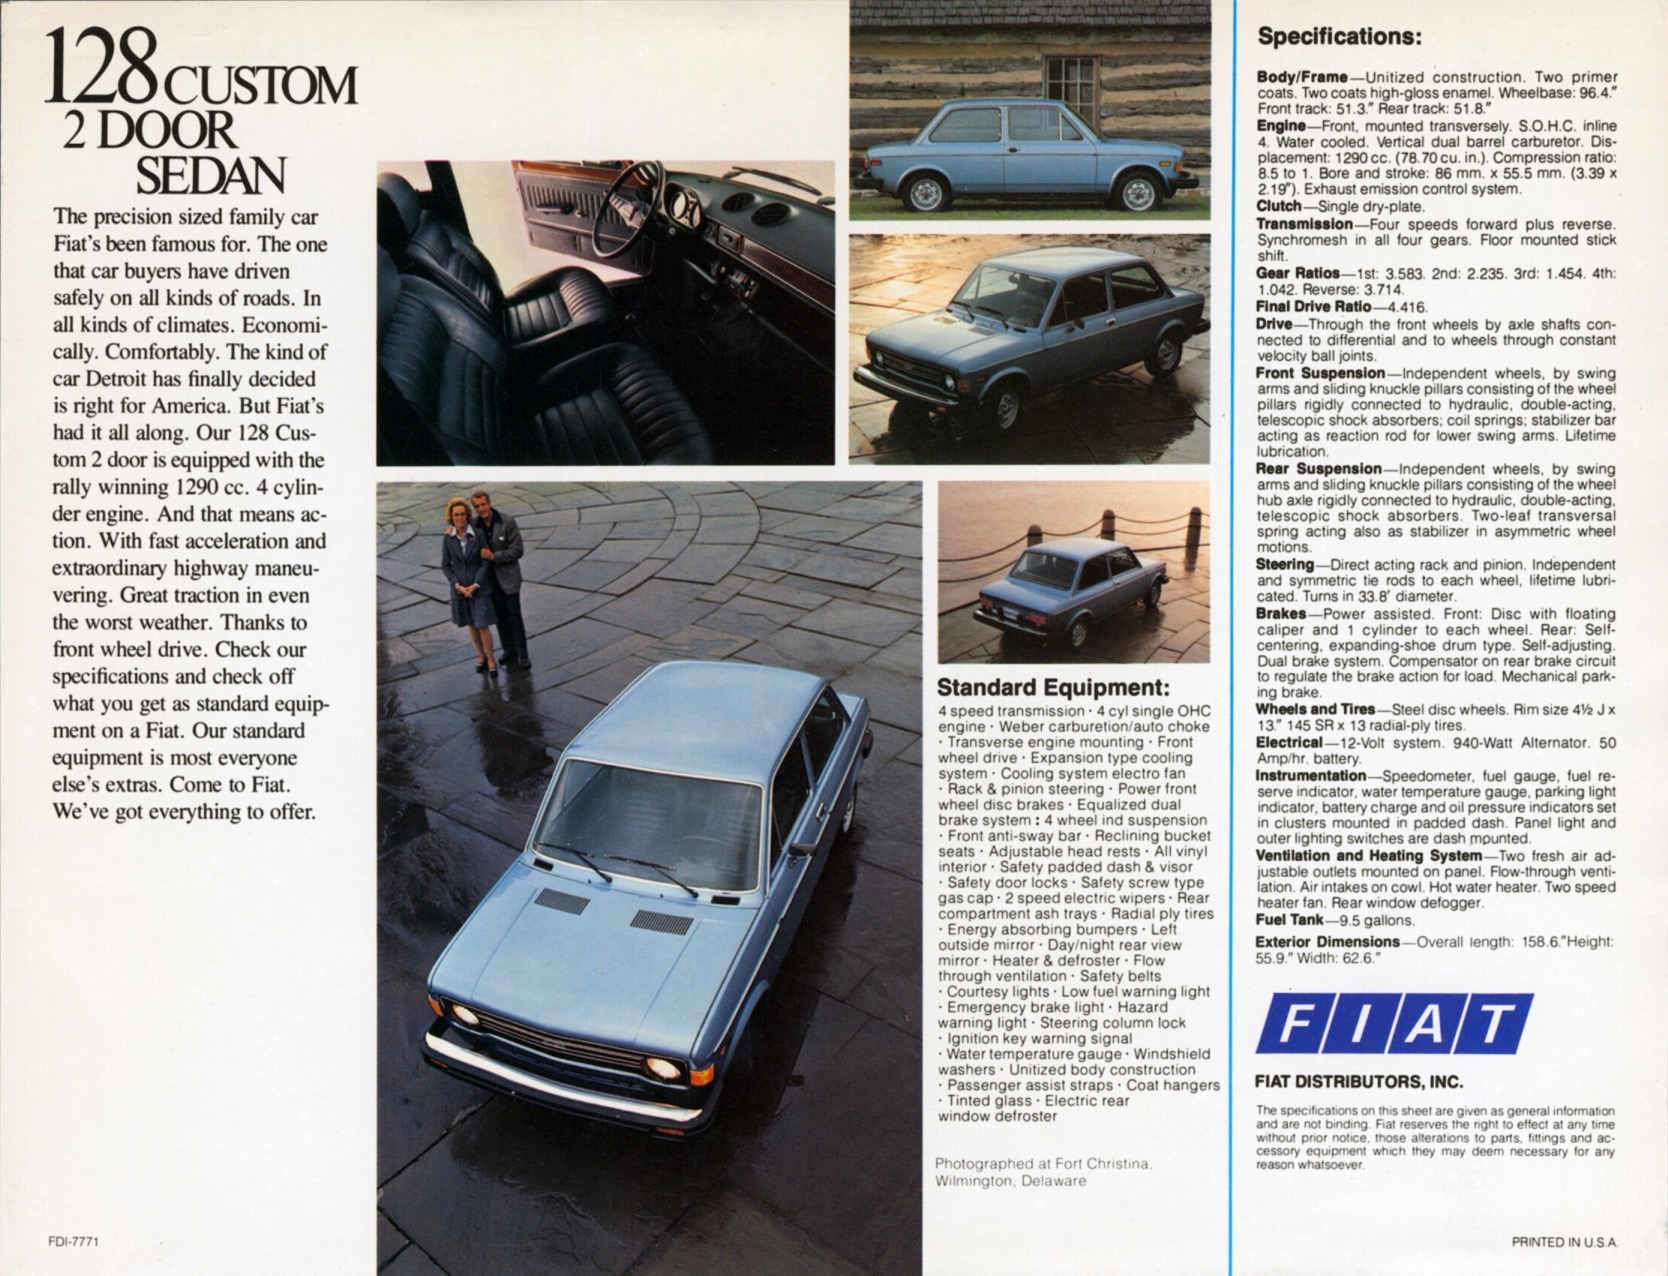 1974 Fiat 128 Custom Brochure Page 1